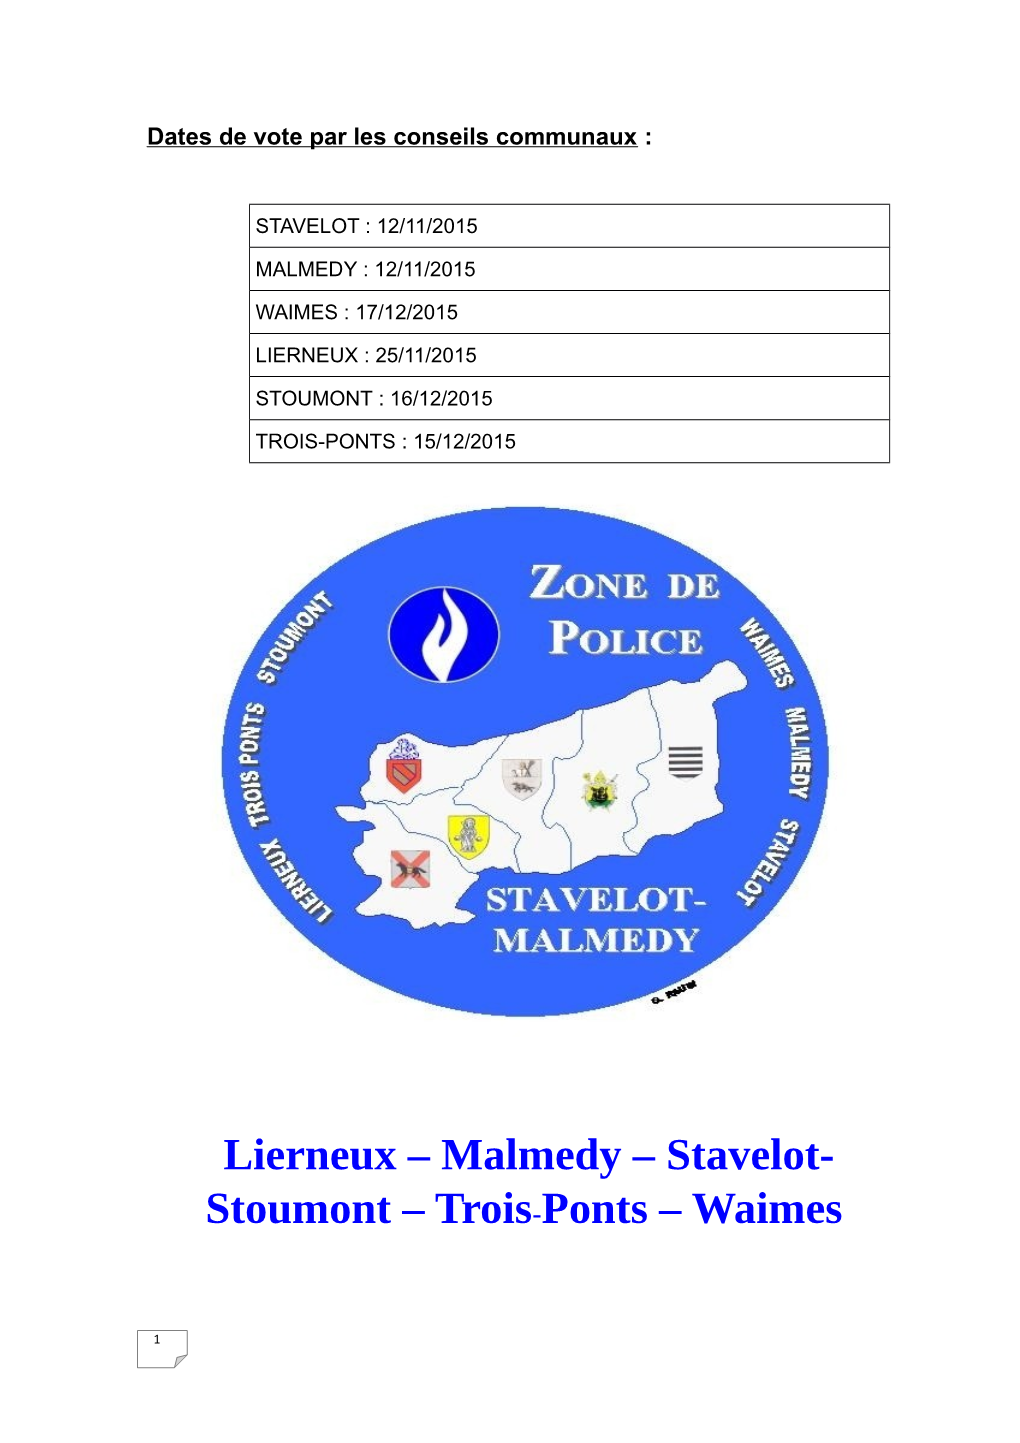 Lierneux – Malmedy – Stavelot- Stoumont – Trois-Ponts – Waimes